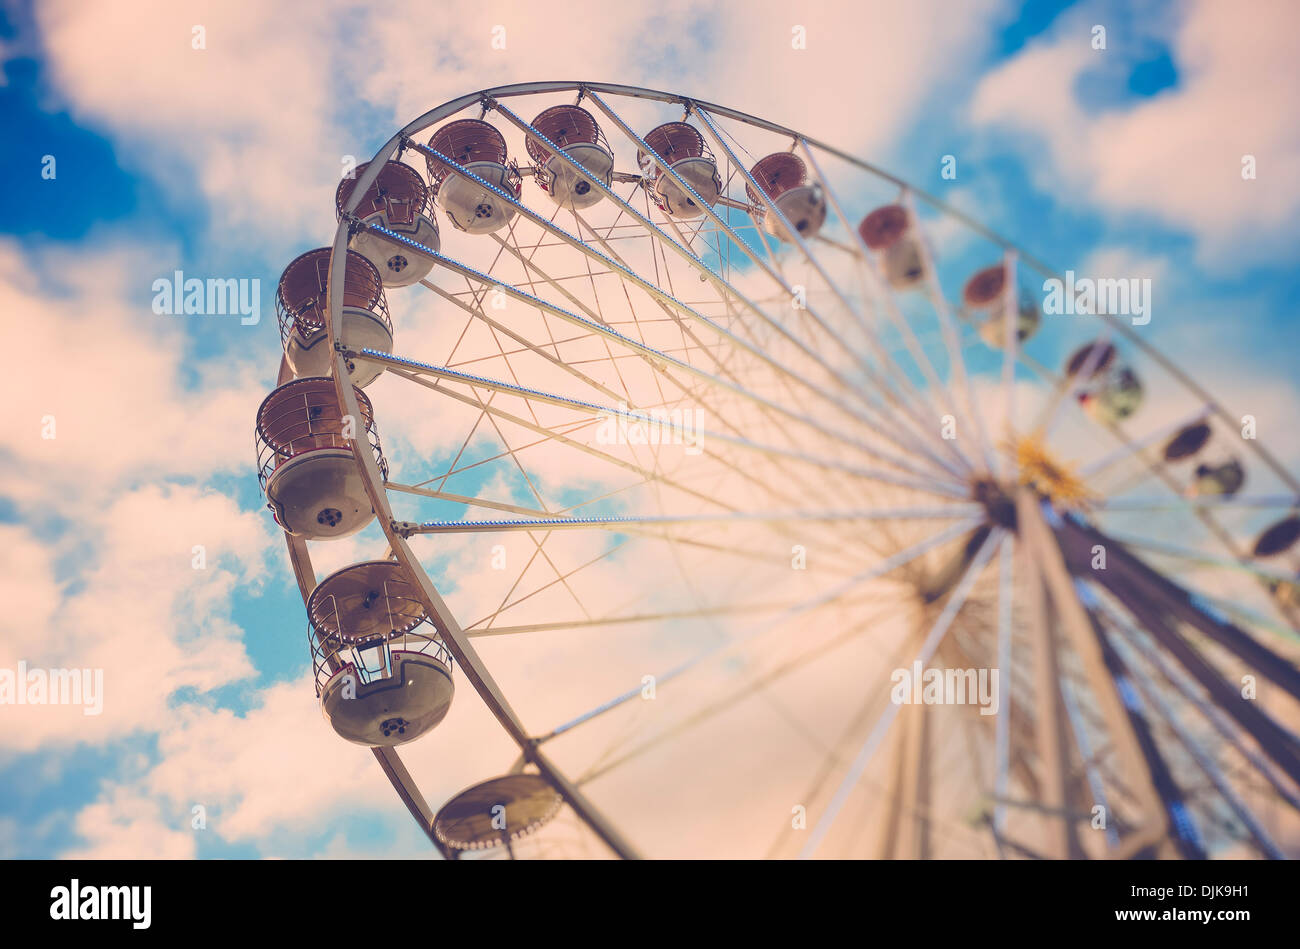 Ferris Wheel against a blue sky Stock Photo